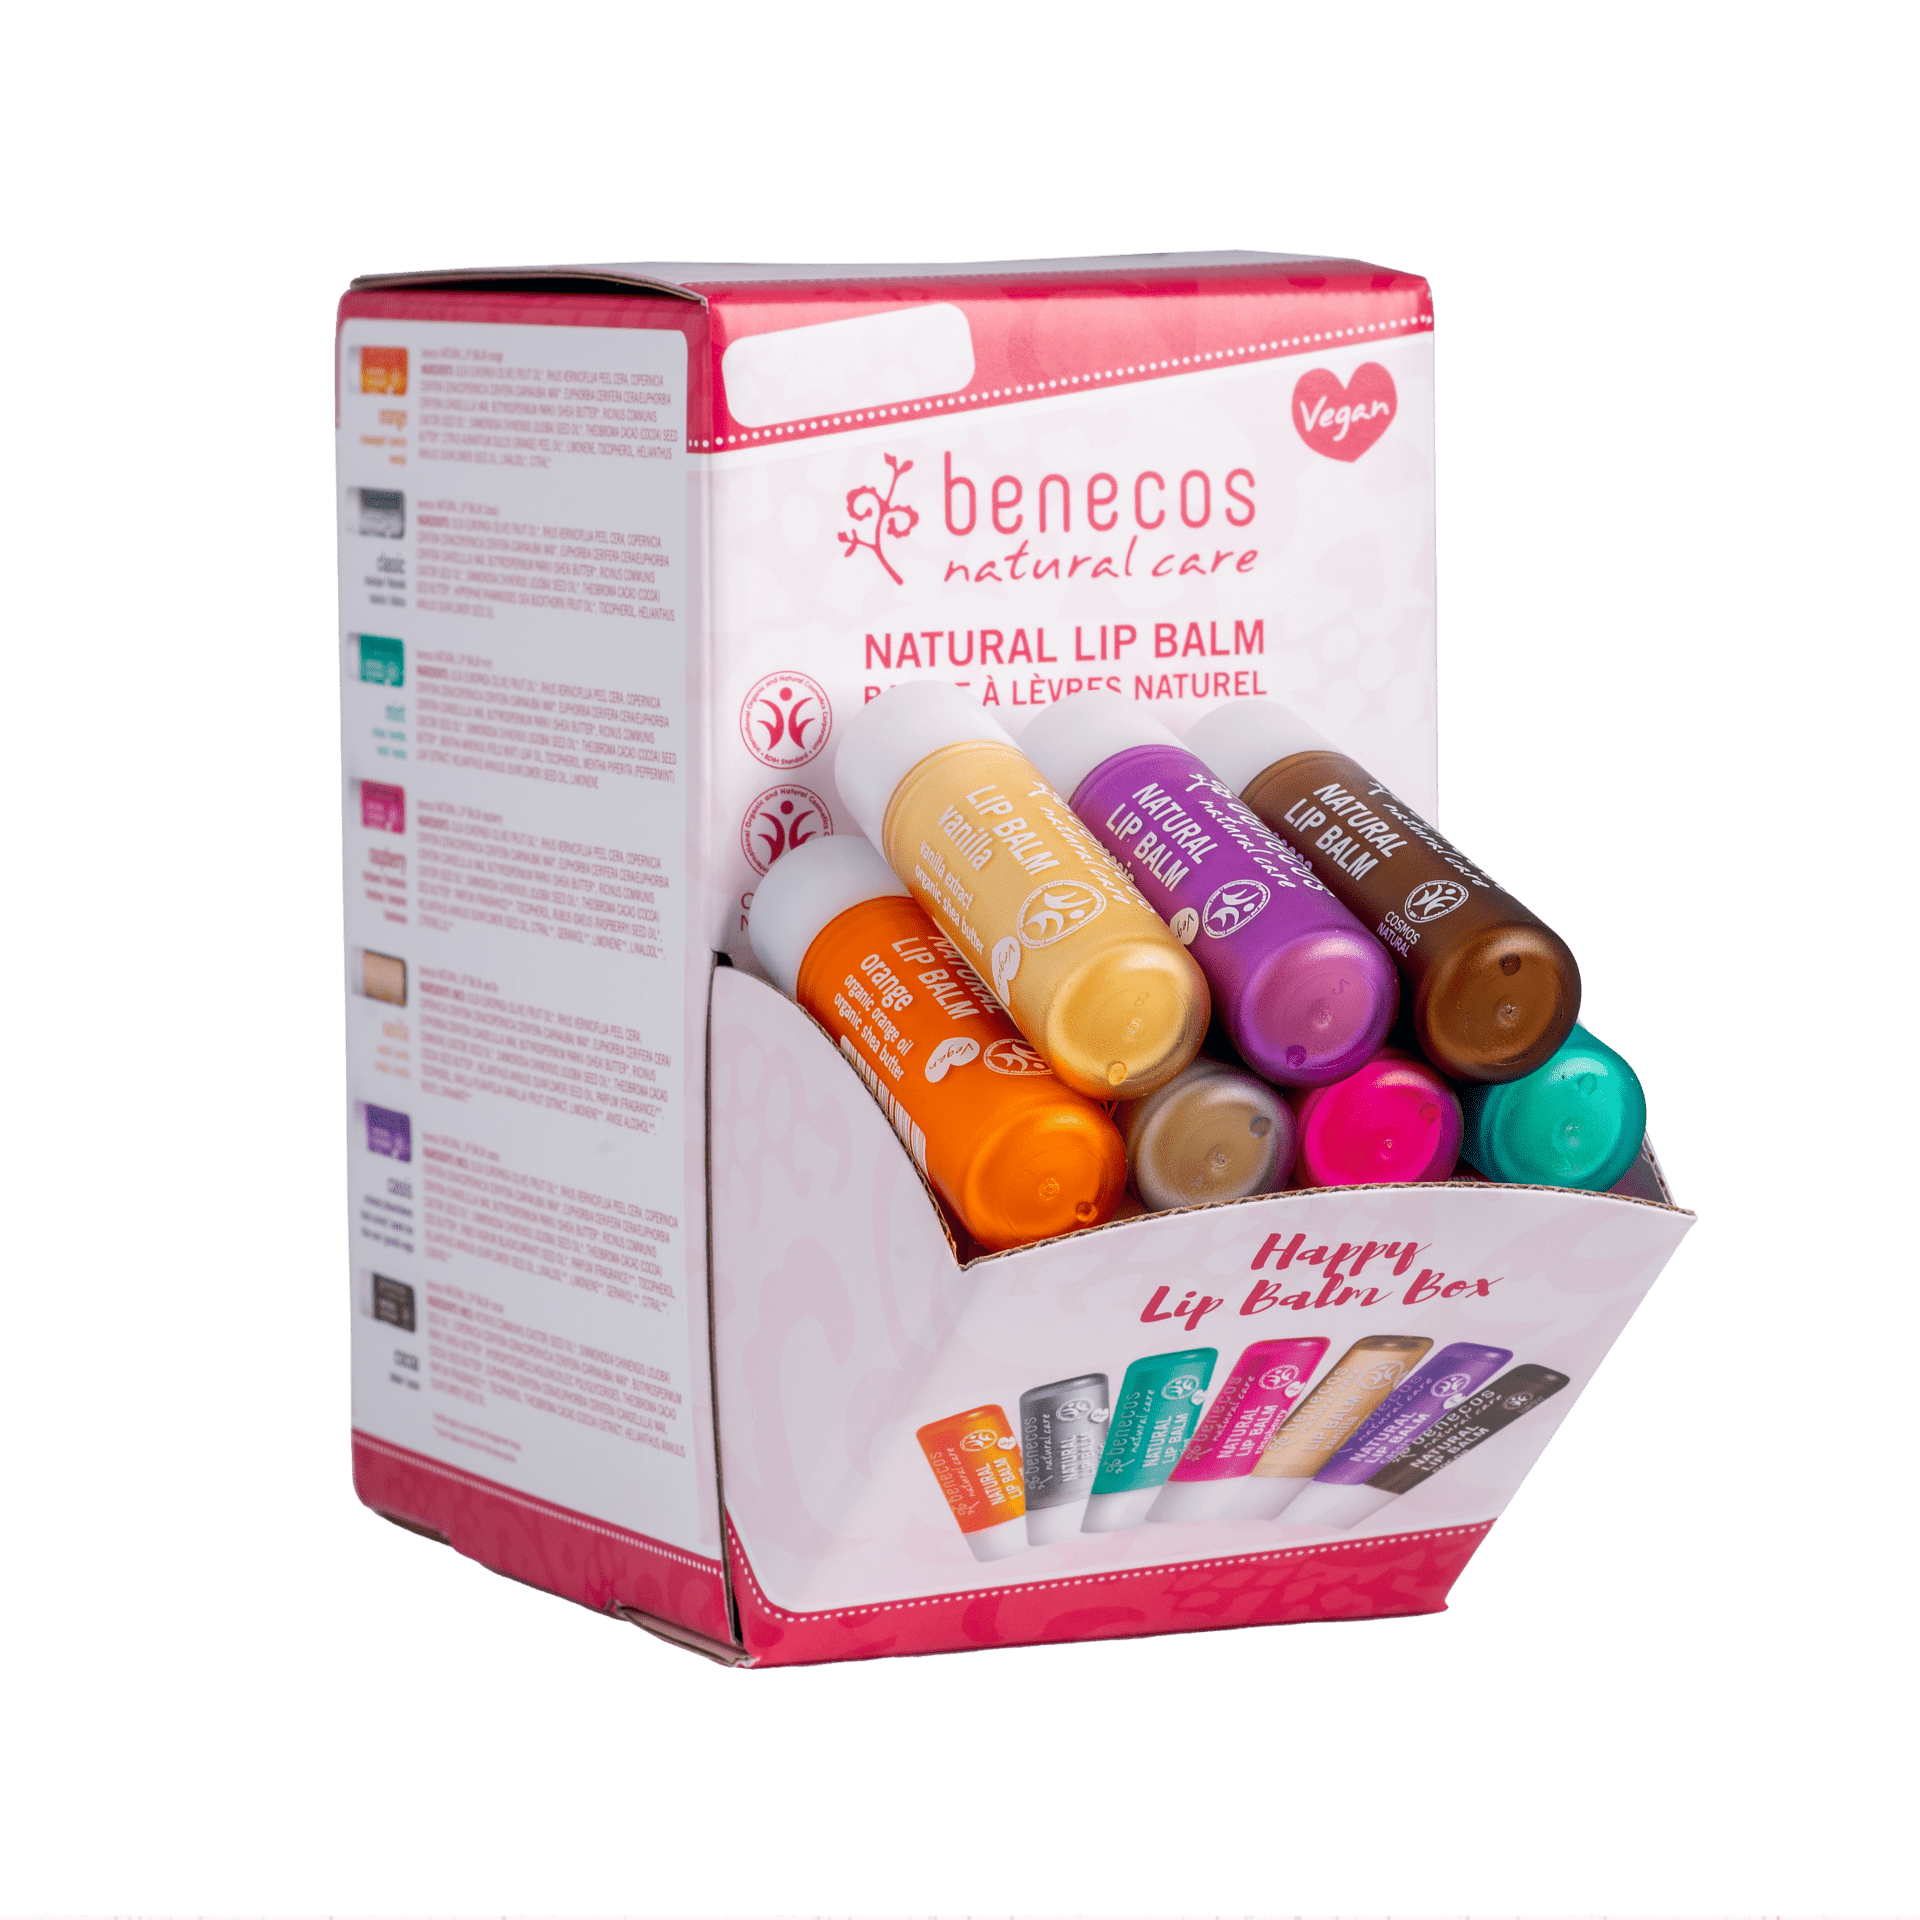 Benecos Display happy lip balm box